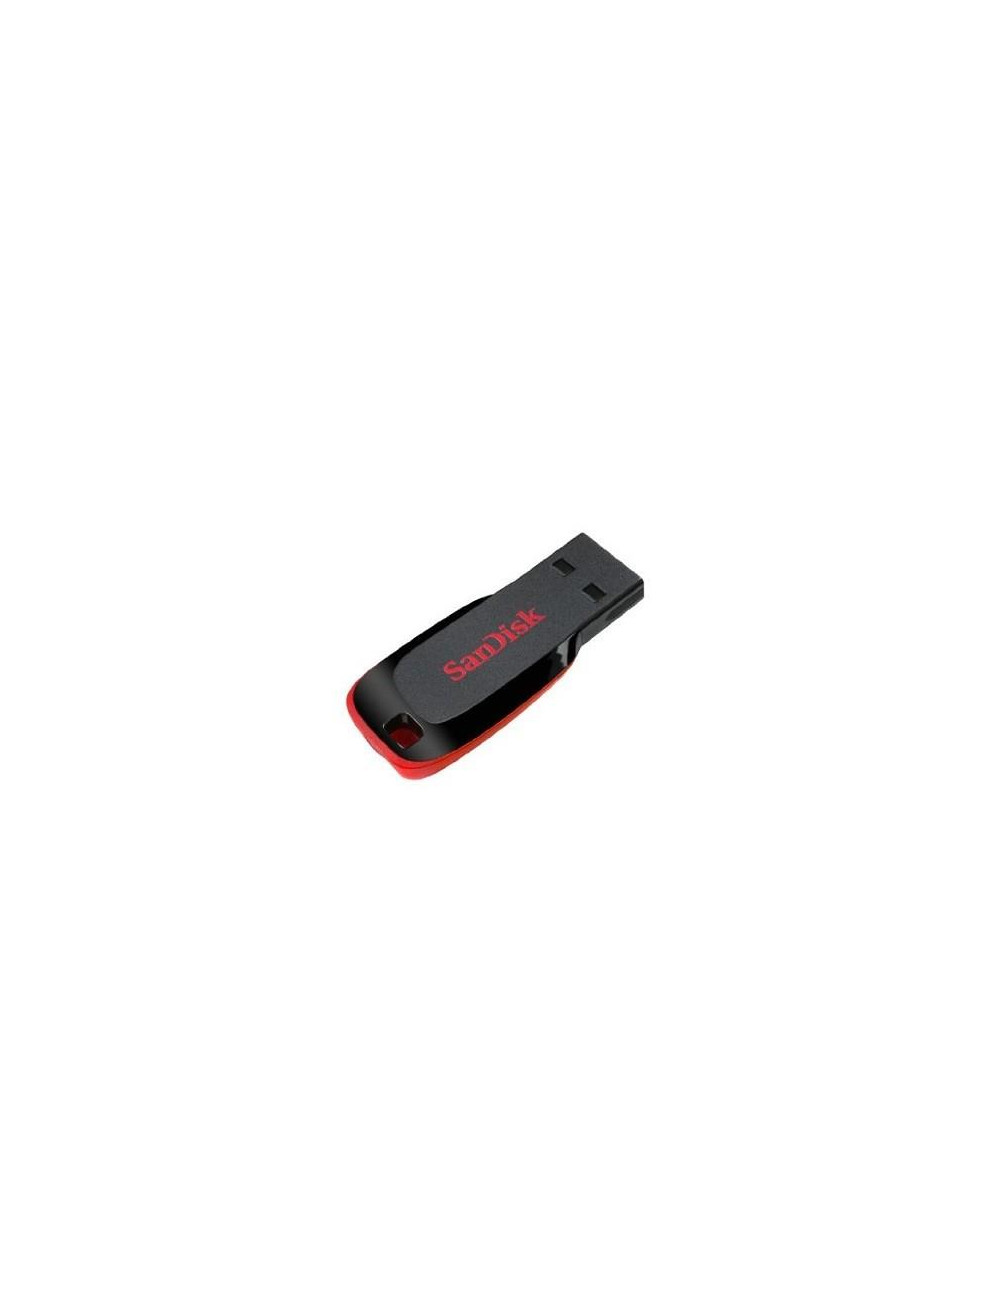 MEMORY DRIVE FLASH USB2 16GB/SDCZ50-016G-B35 SANDISK